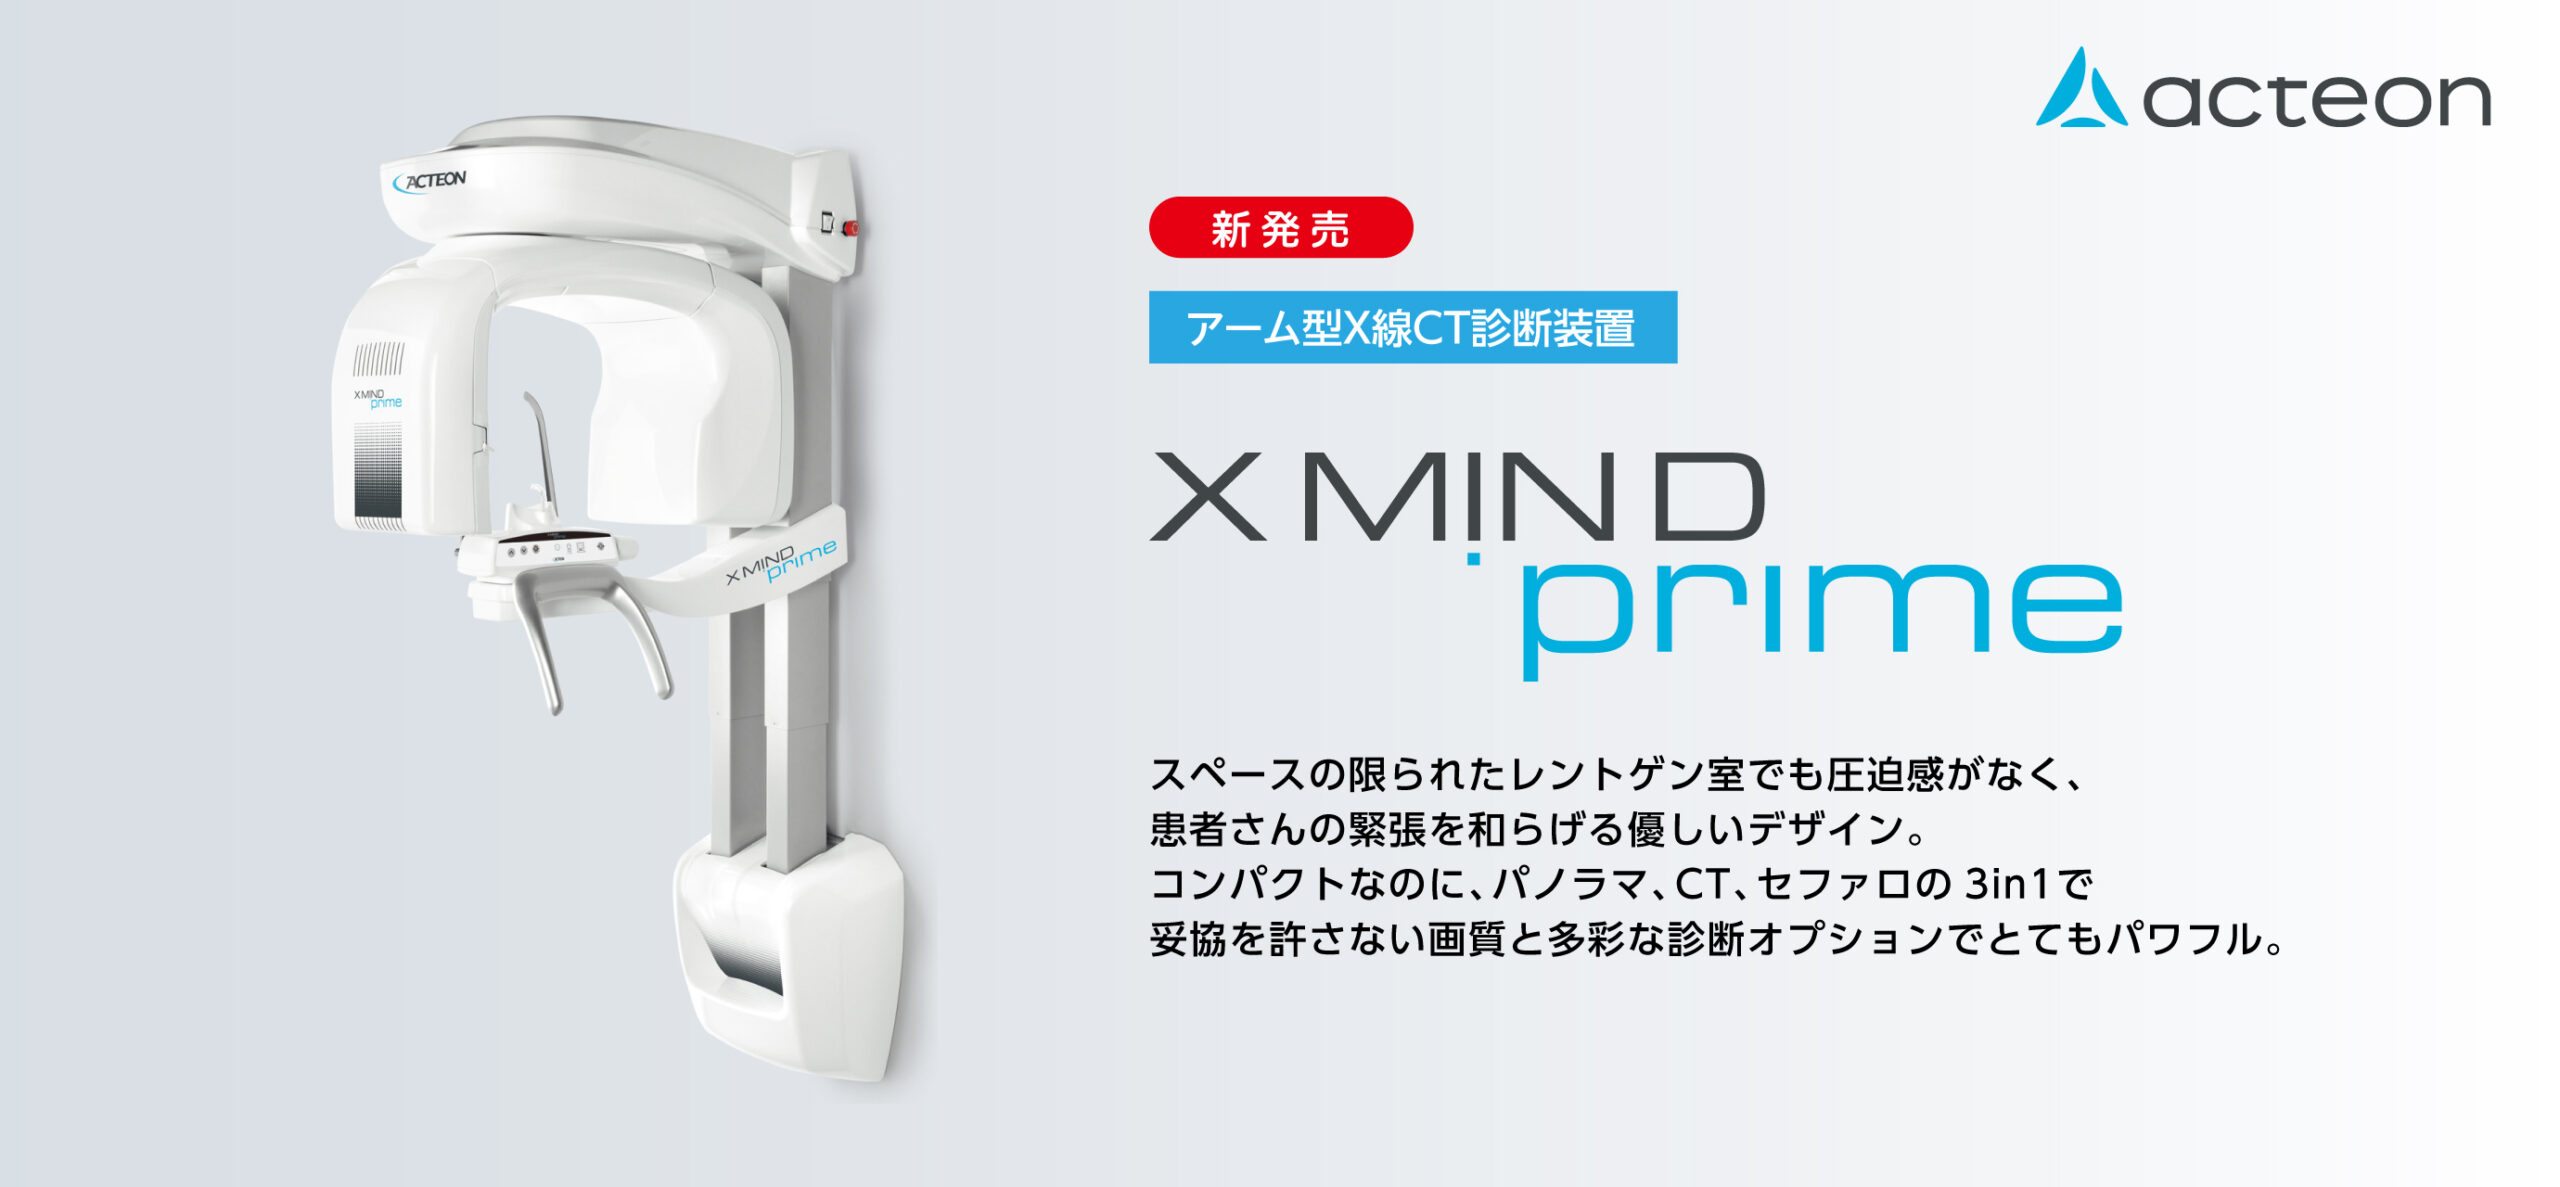 X MIND prime